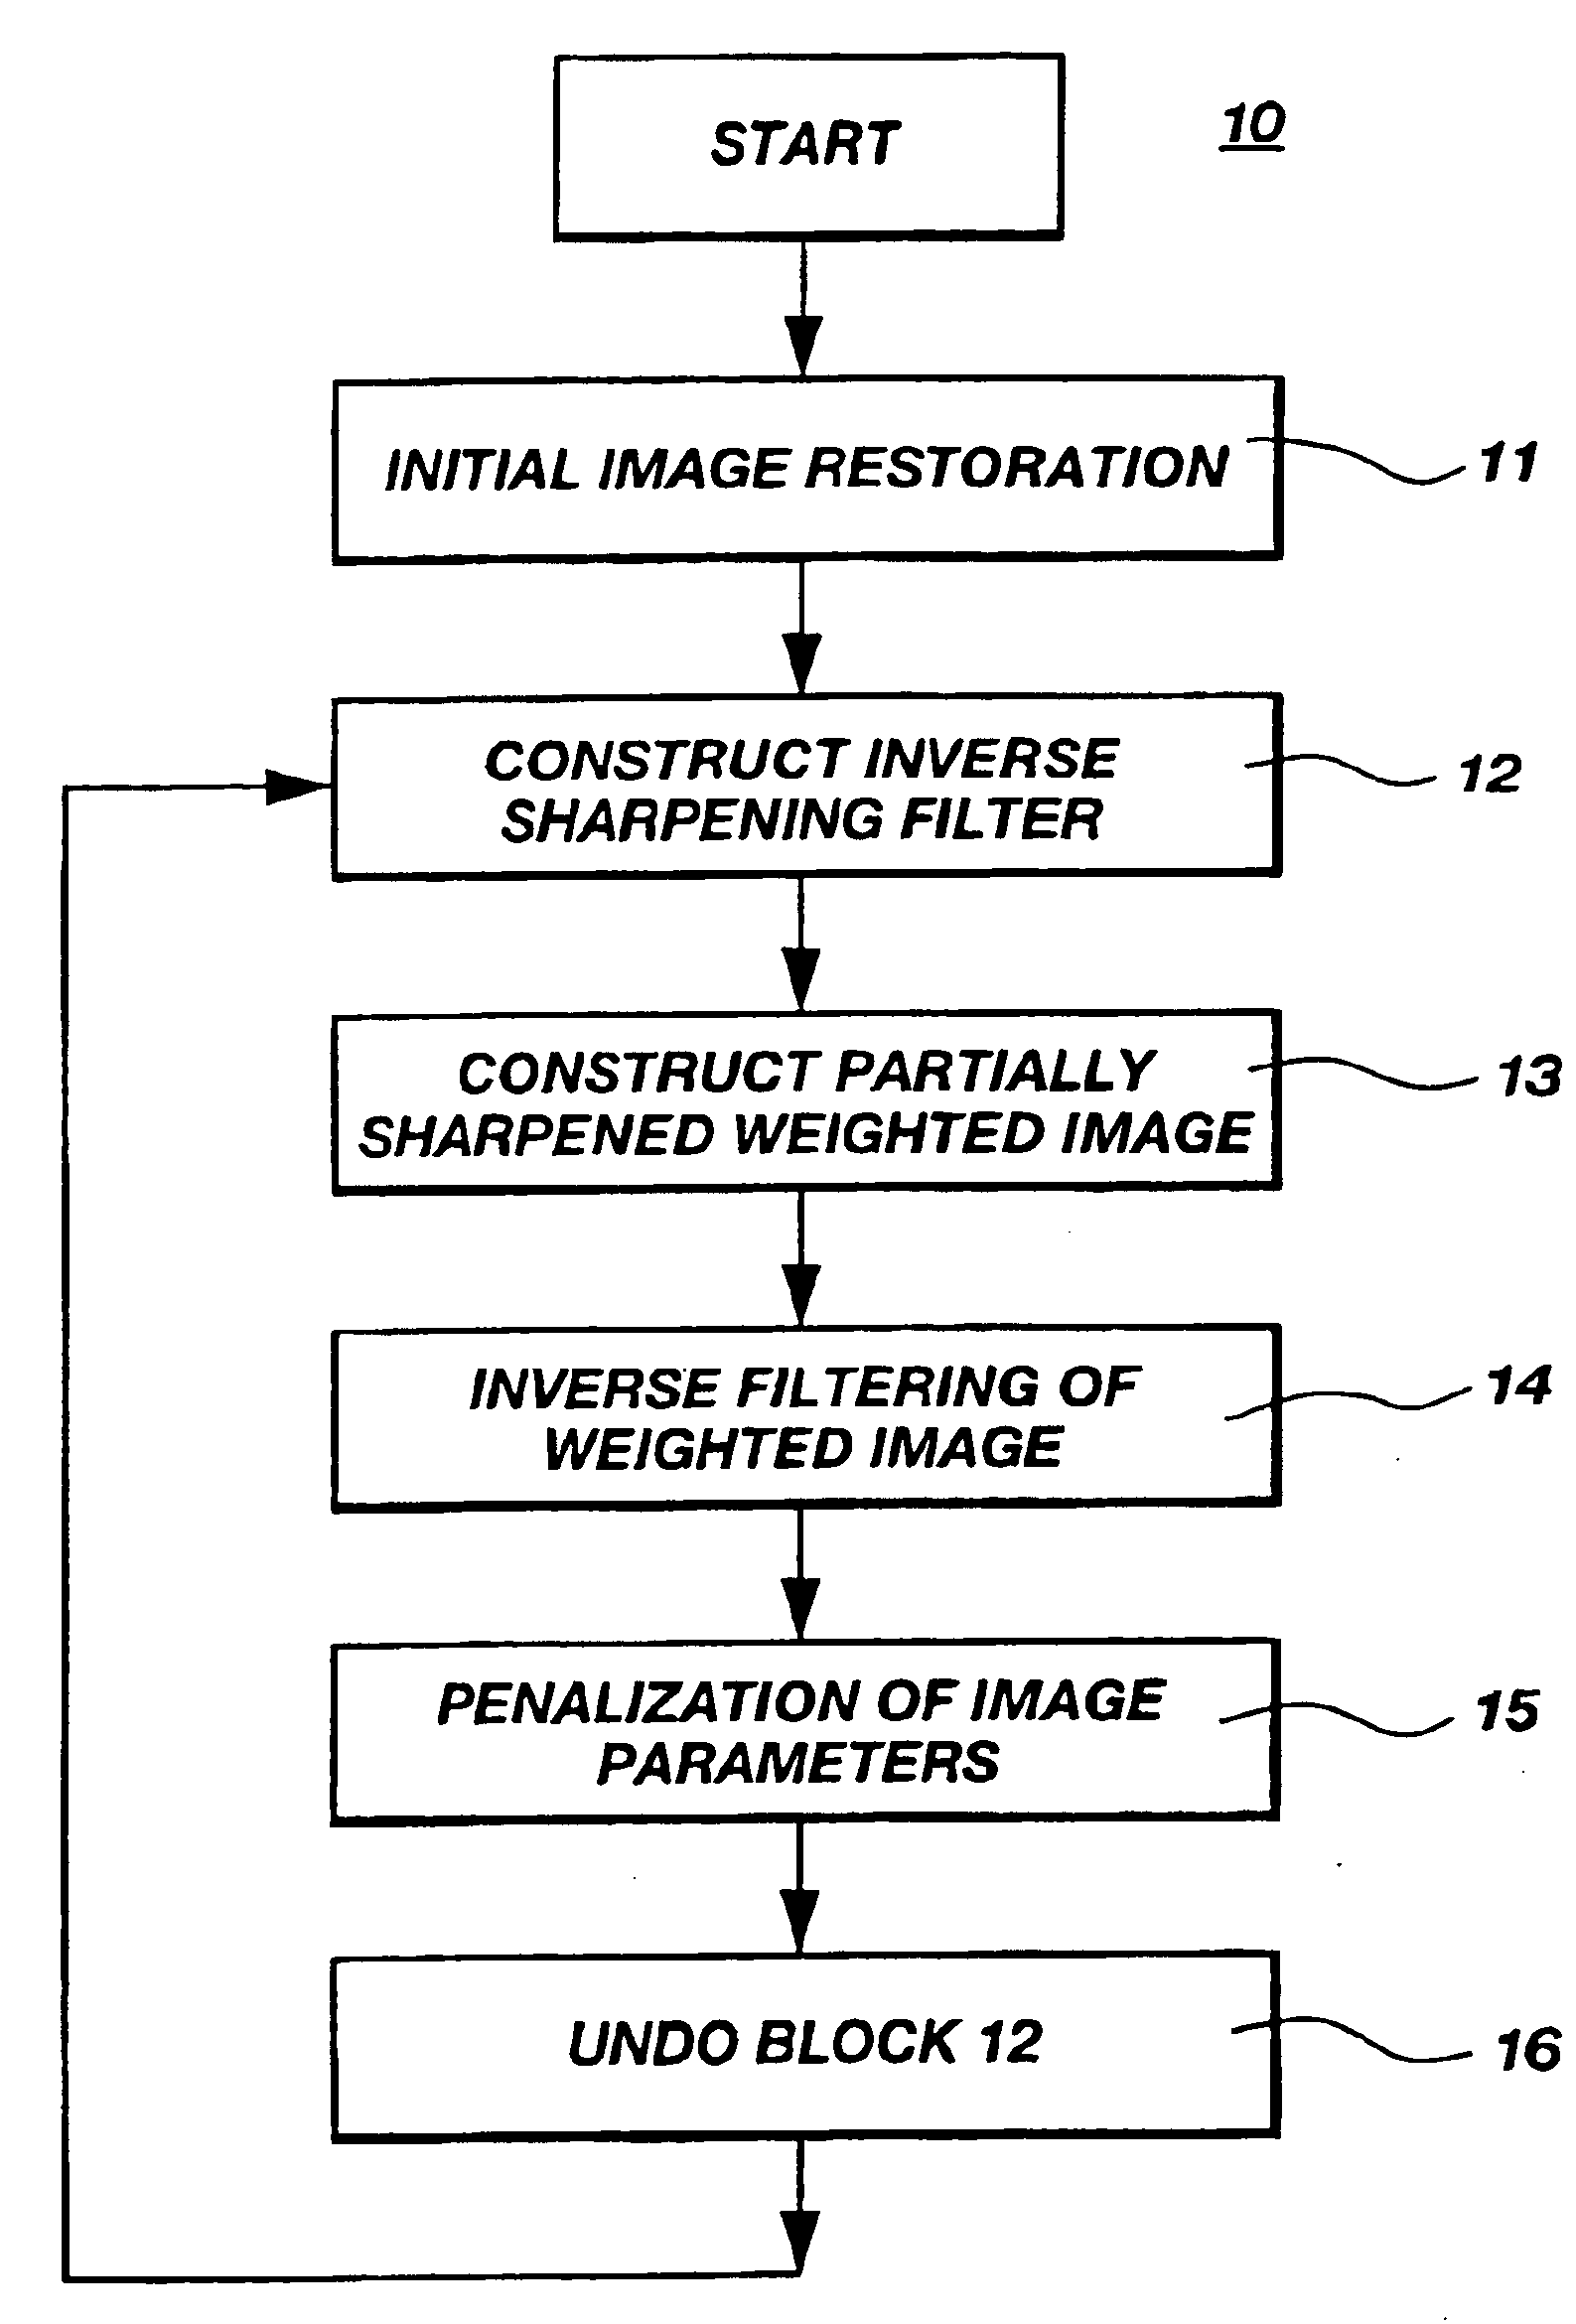 Method of digital image enhancement and sharpening